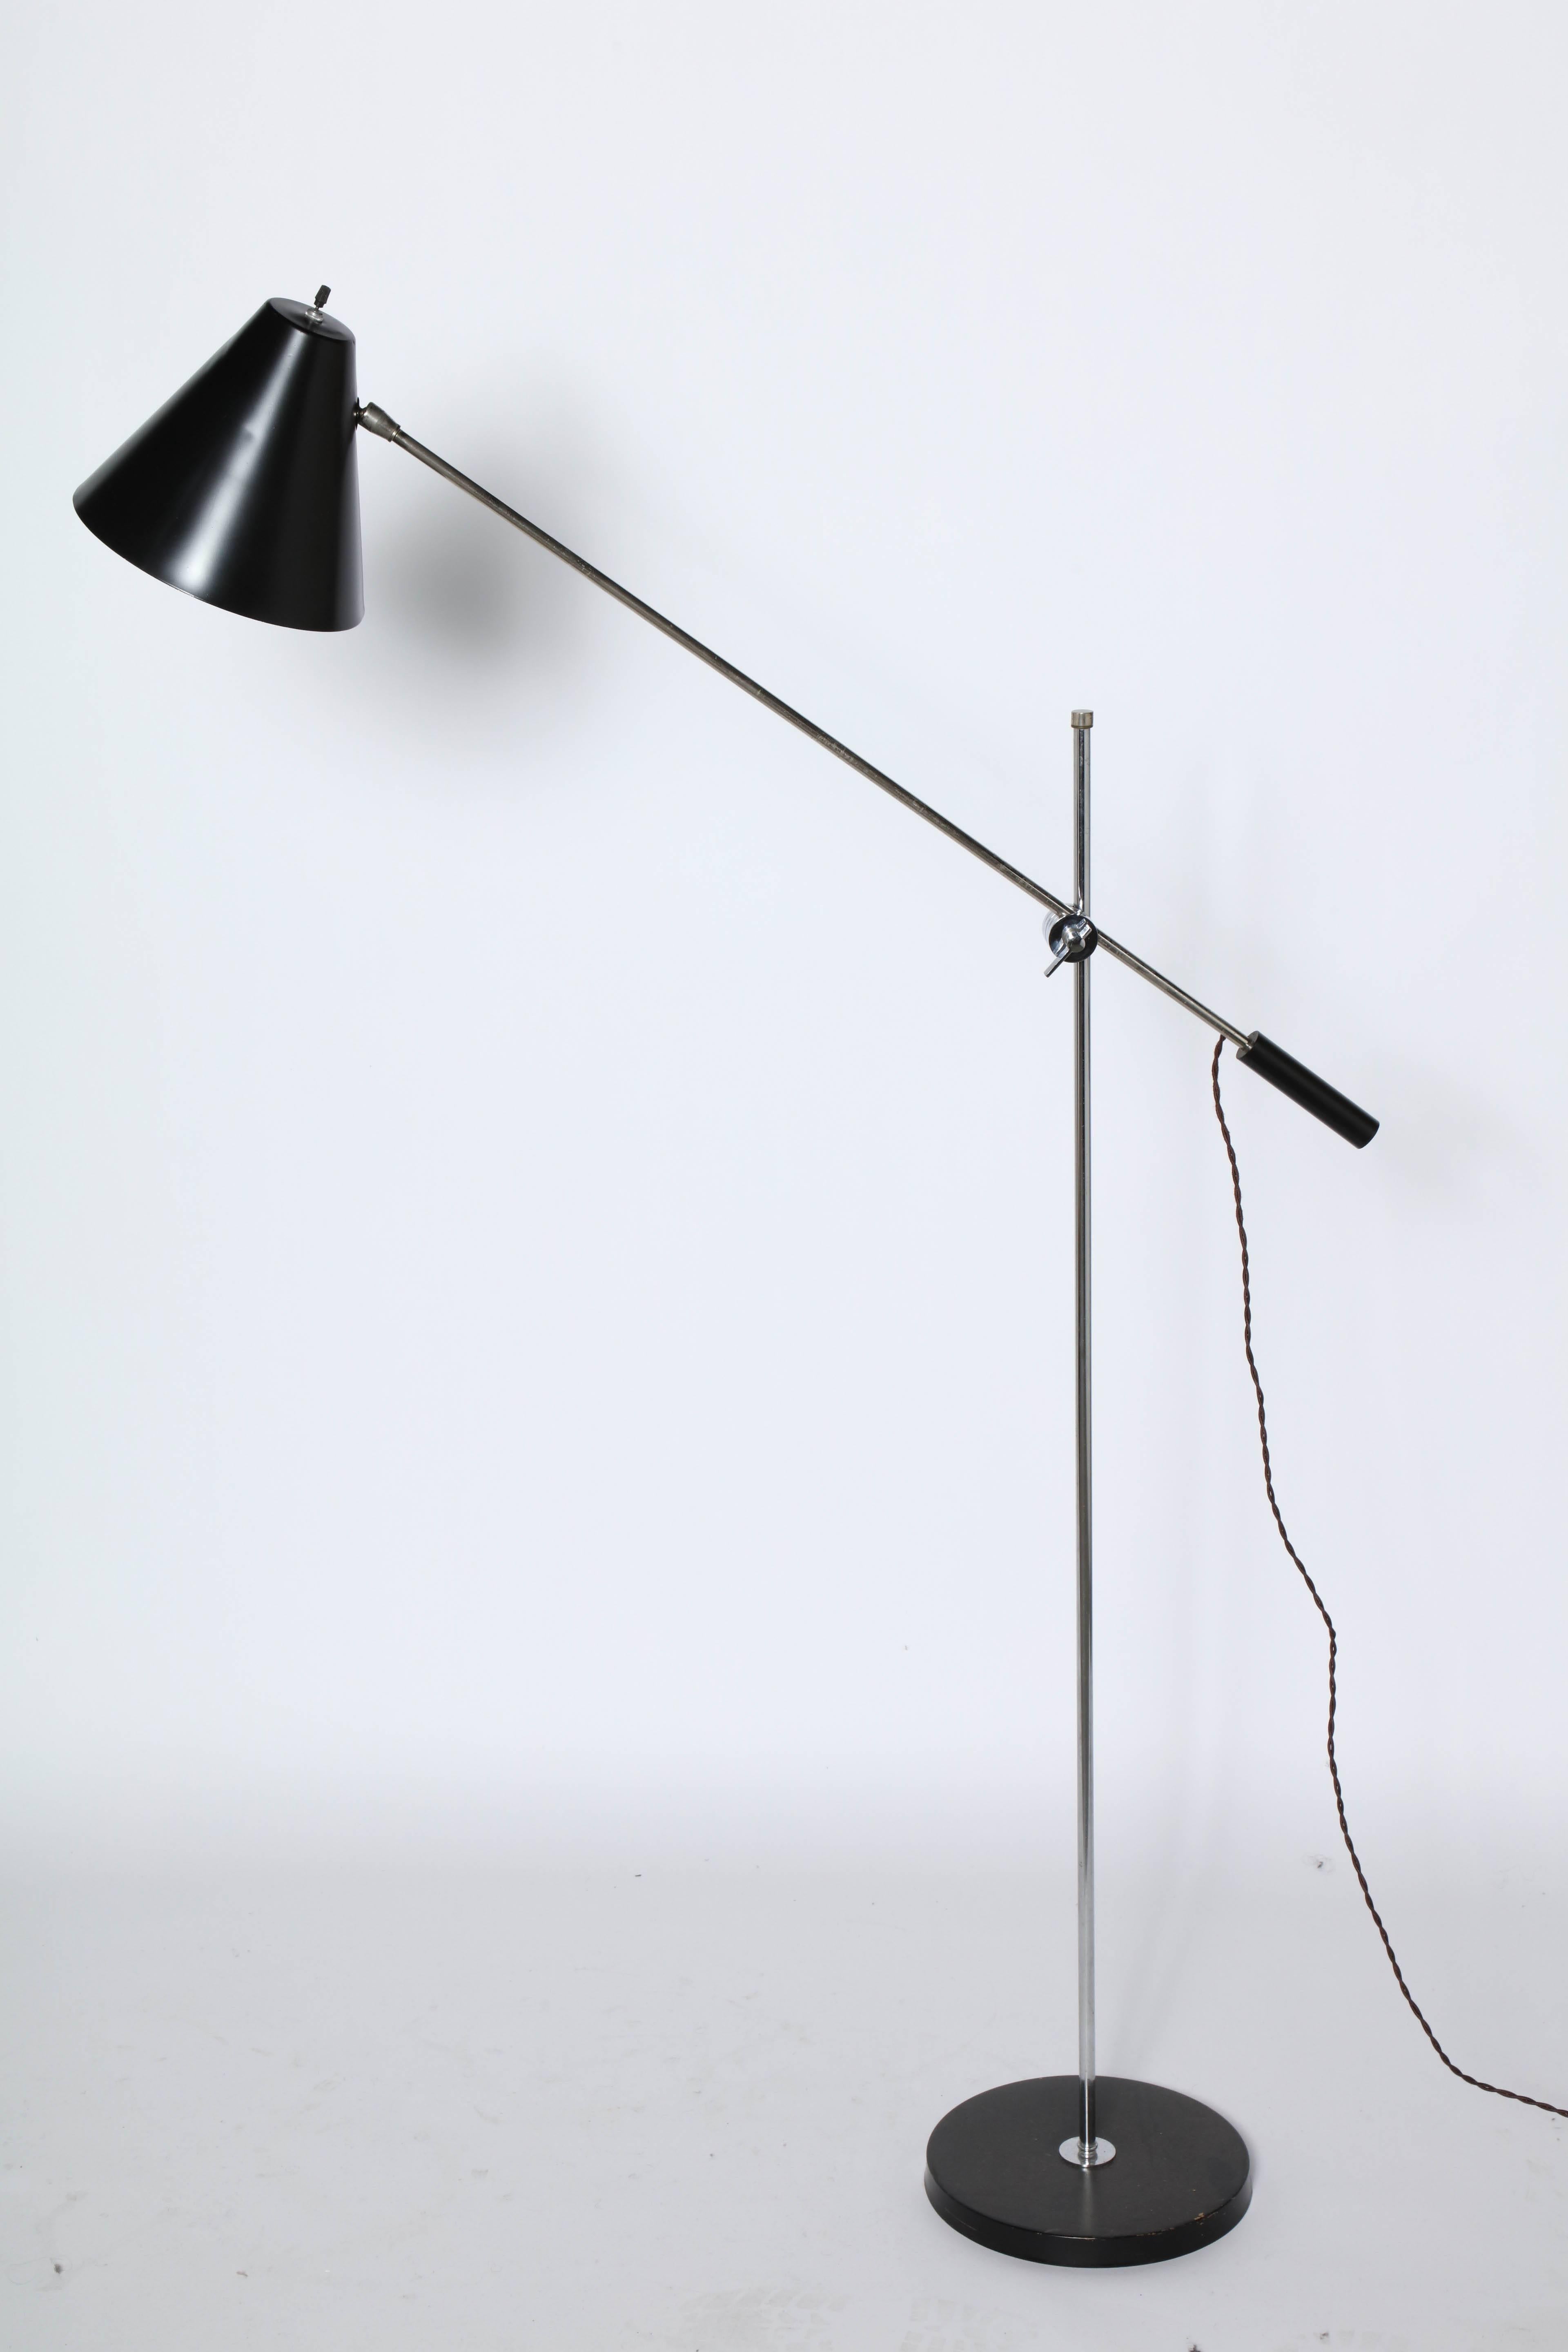 American Laurel Lamp Co. Adjustable Chrome Floor Lamp with Black Enamel Shade, 1960s